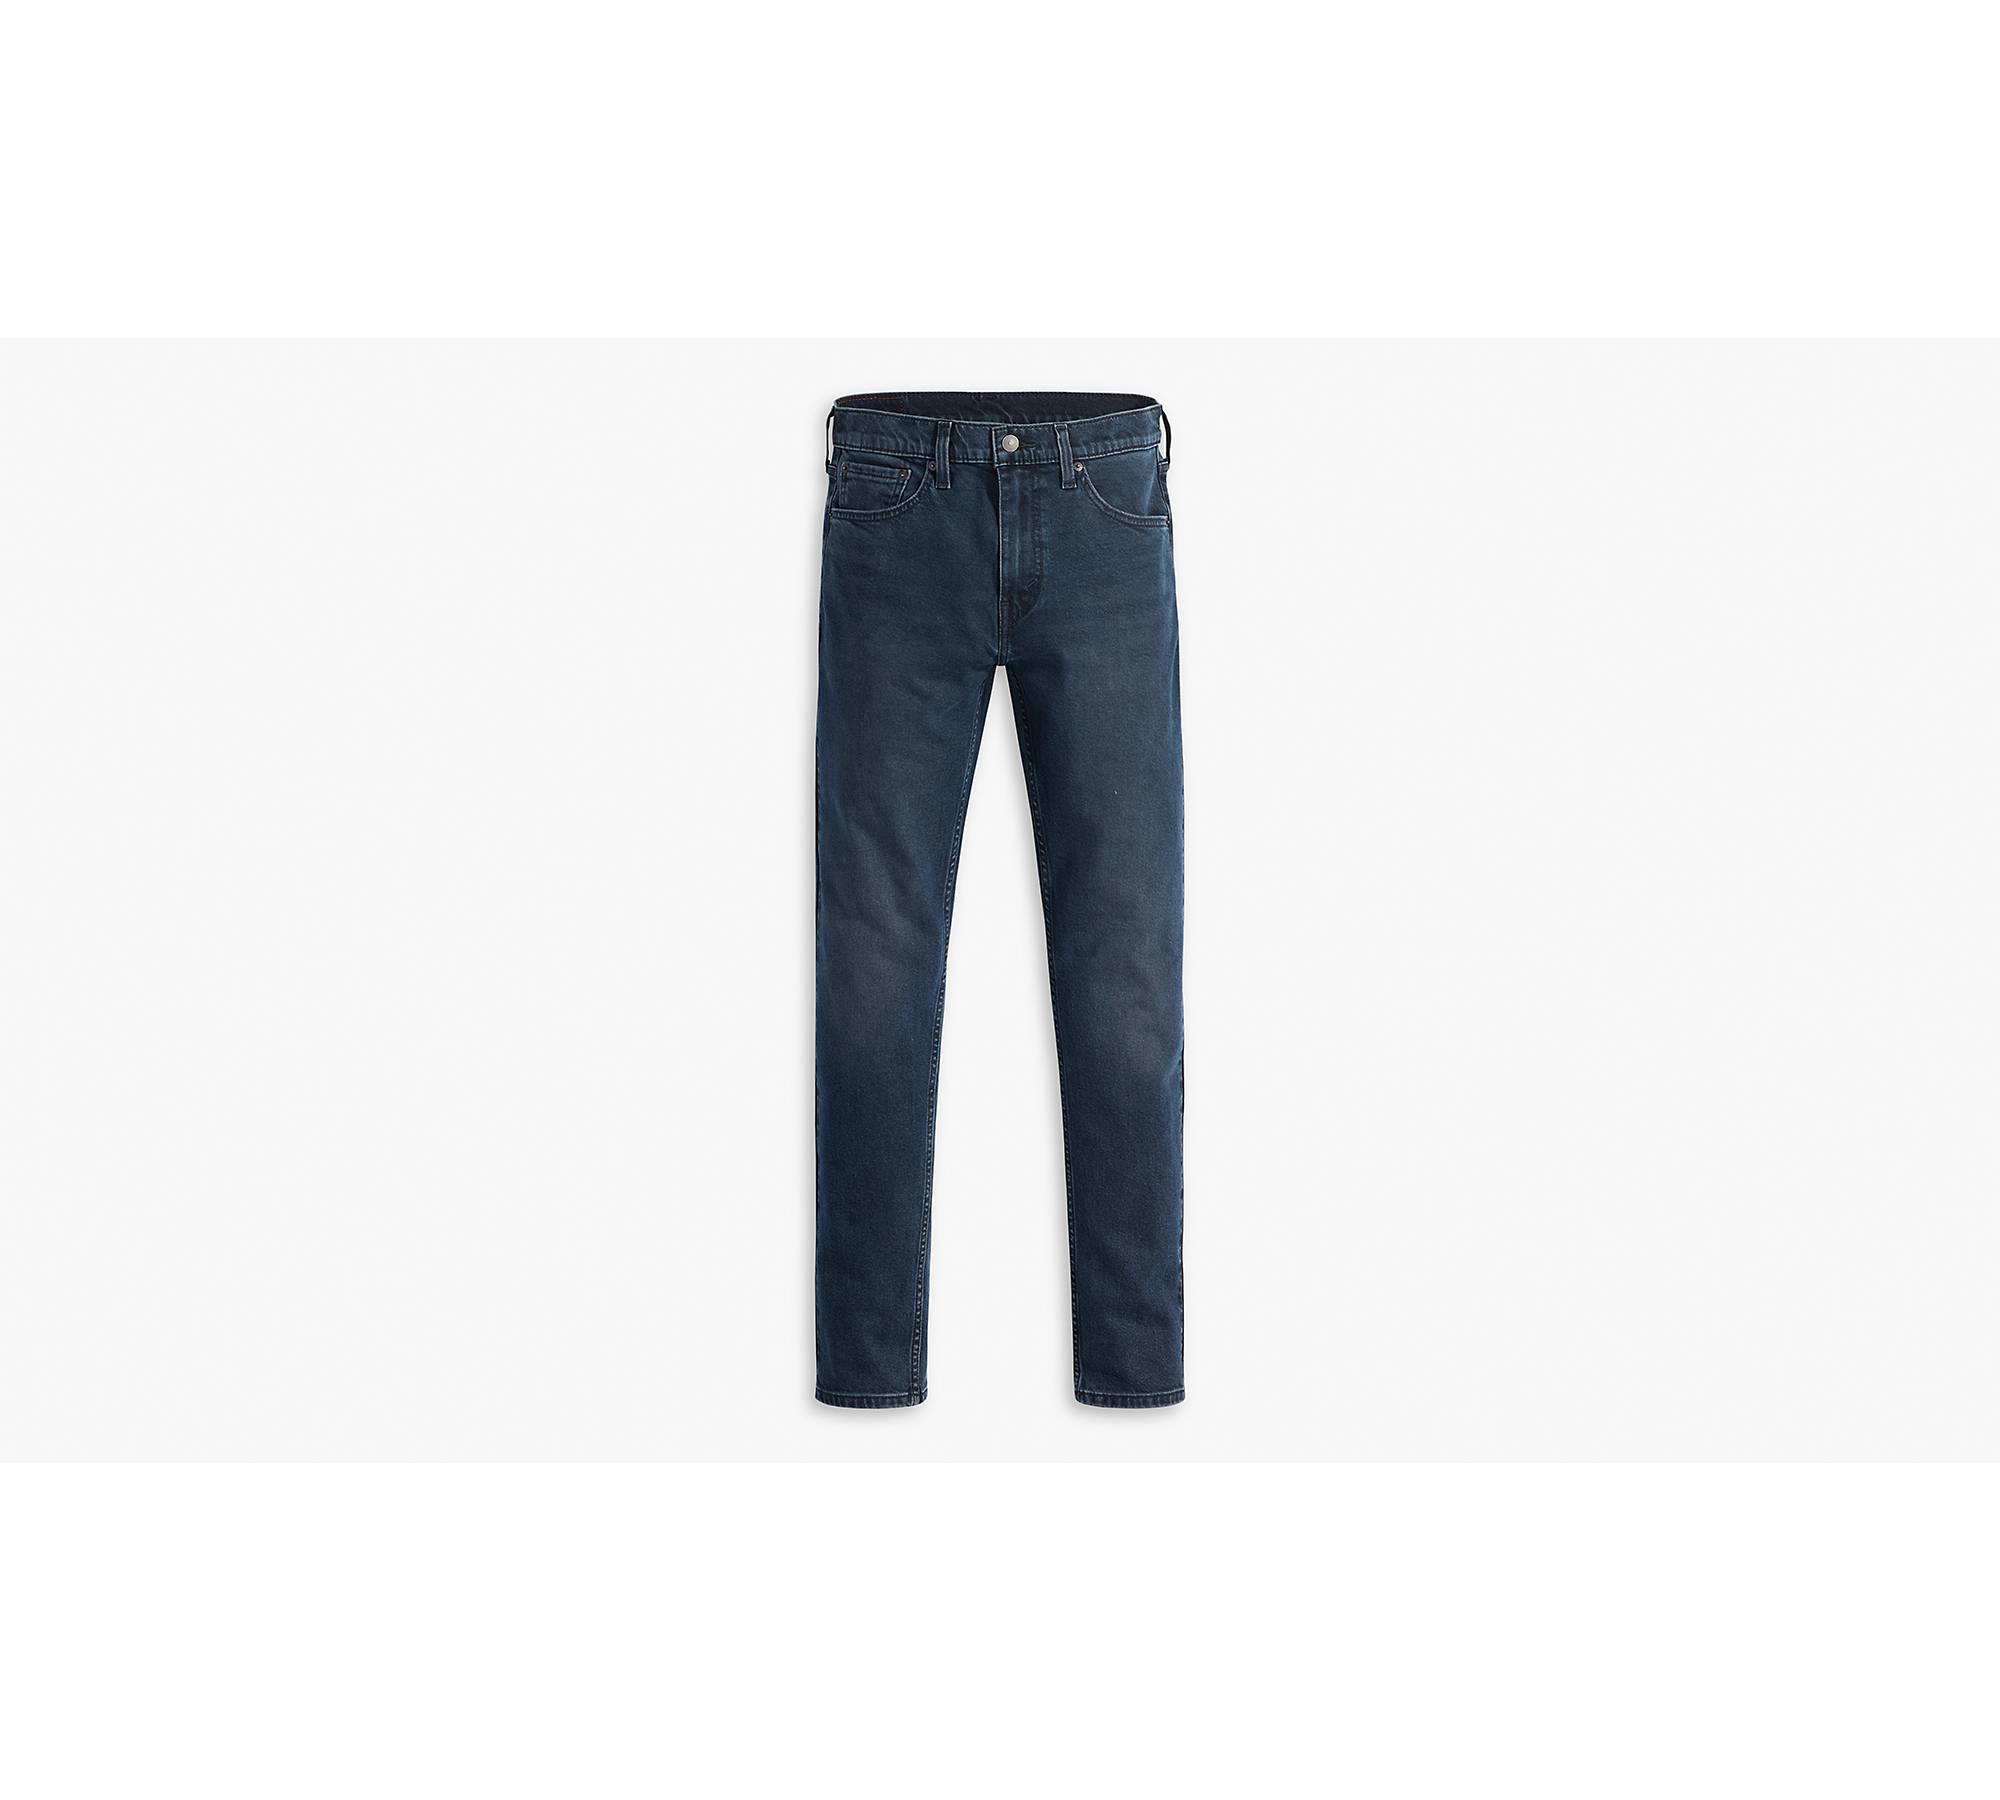 512™ Slim Taper Fit Men's Jeans - Blue